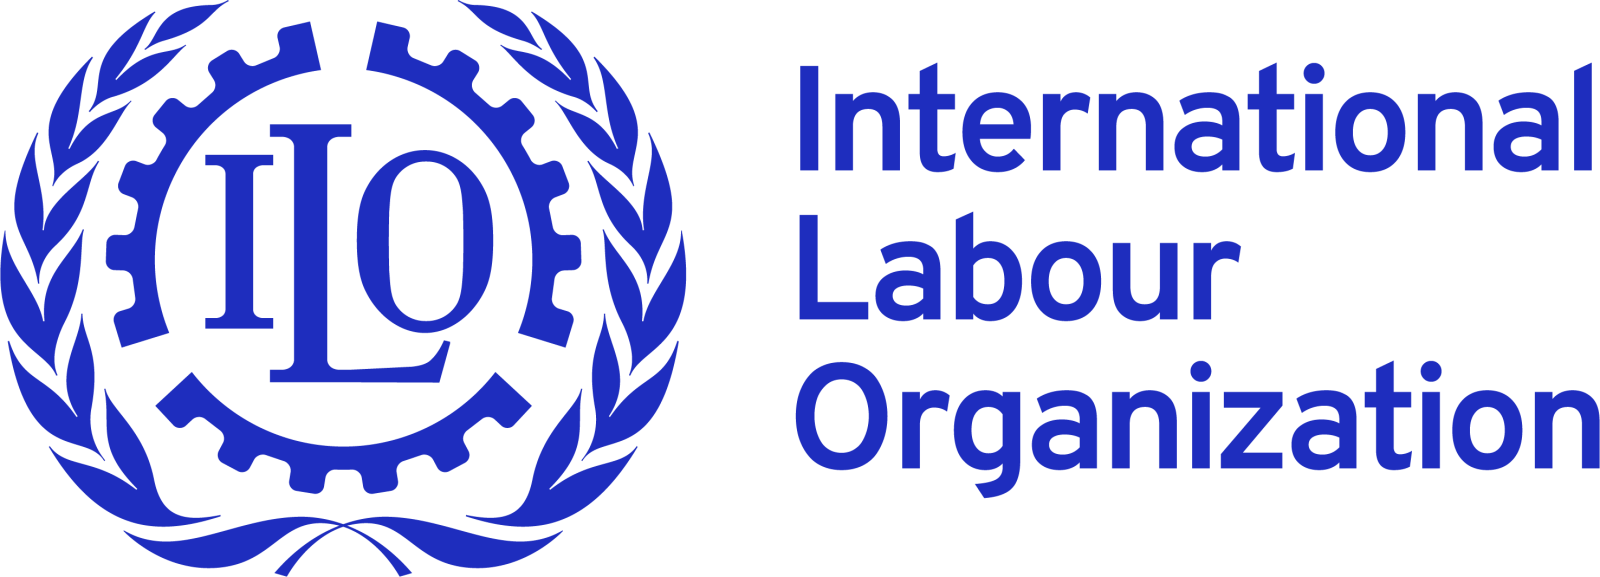 The International Labour Organisation logo